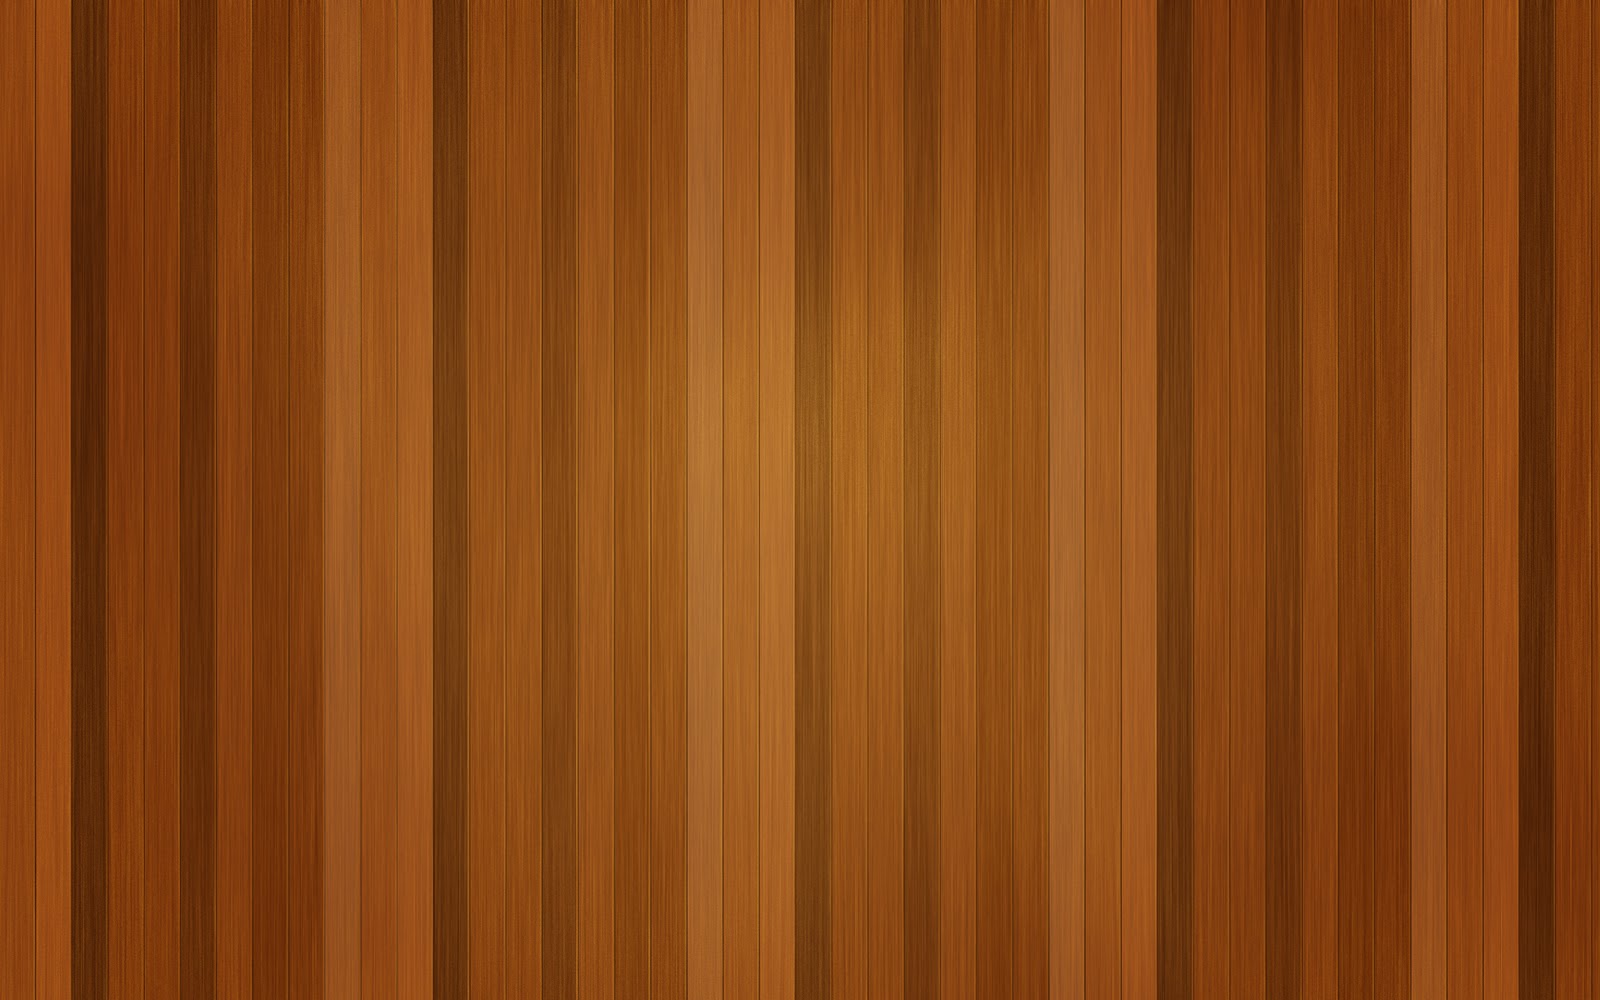 Orange Tan And Brown Wallpapers